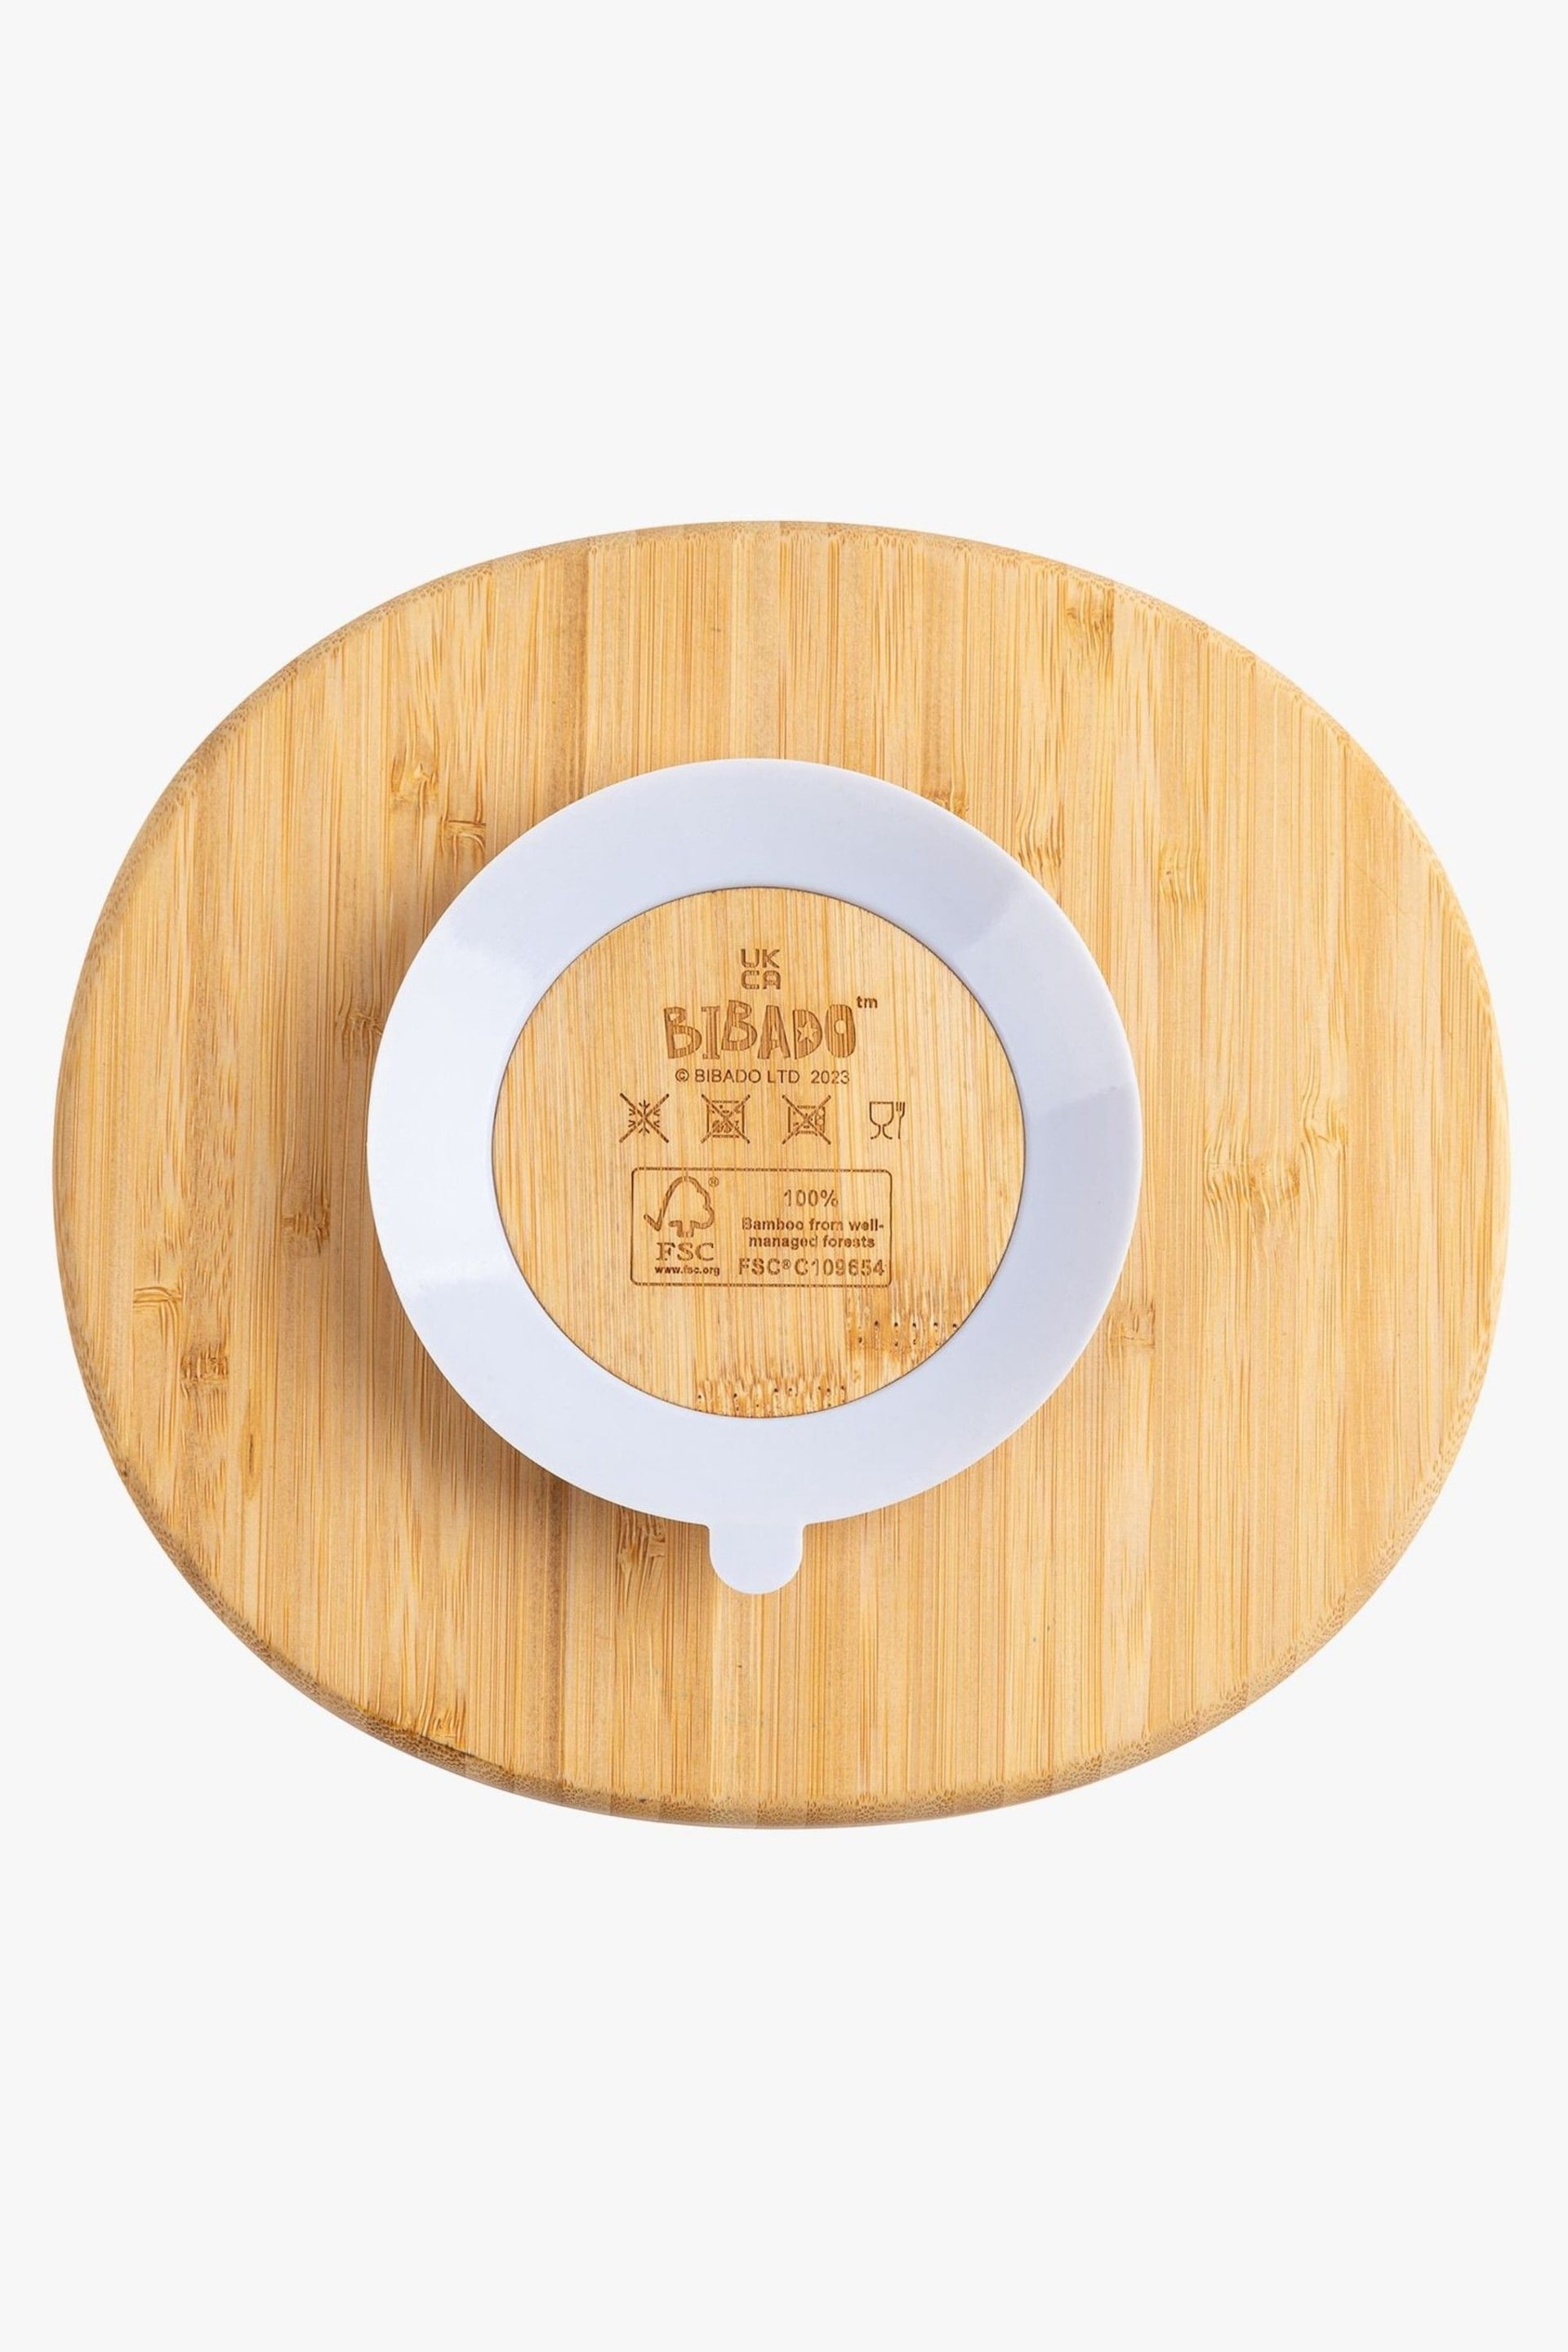 Bibado Bamboo Suction Divider Plate: Mist - Image 5 of 6